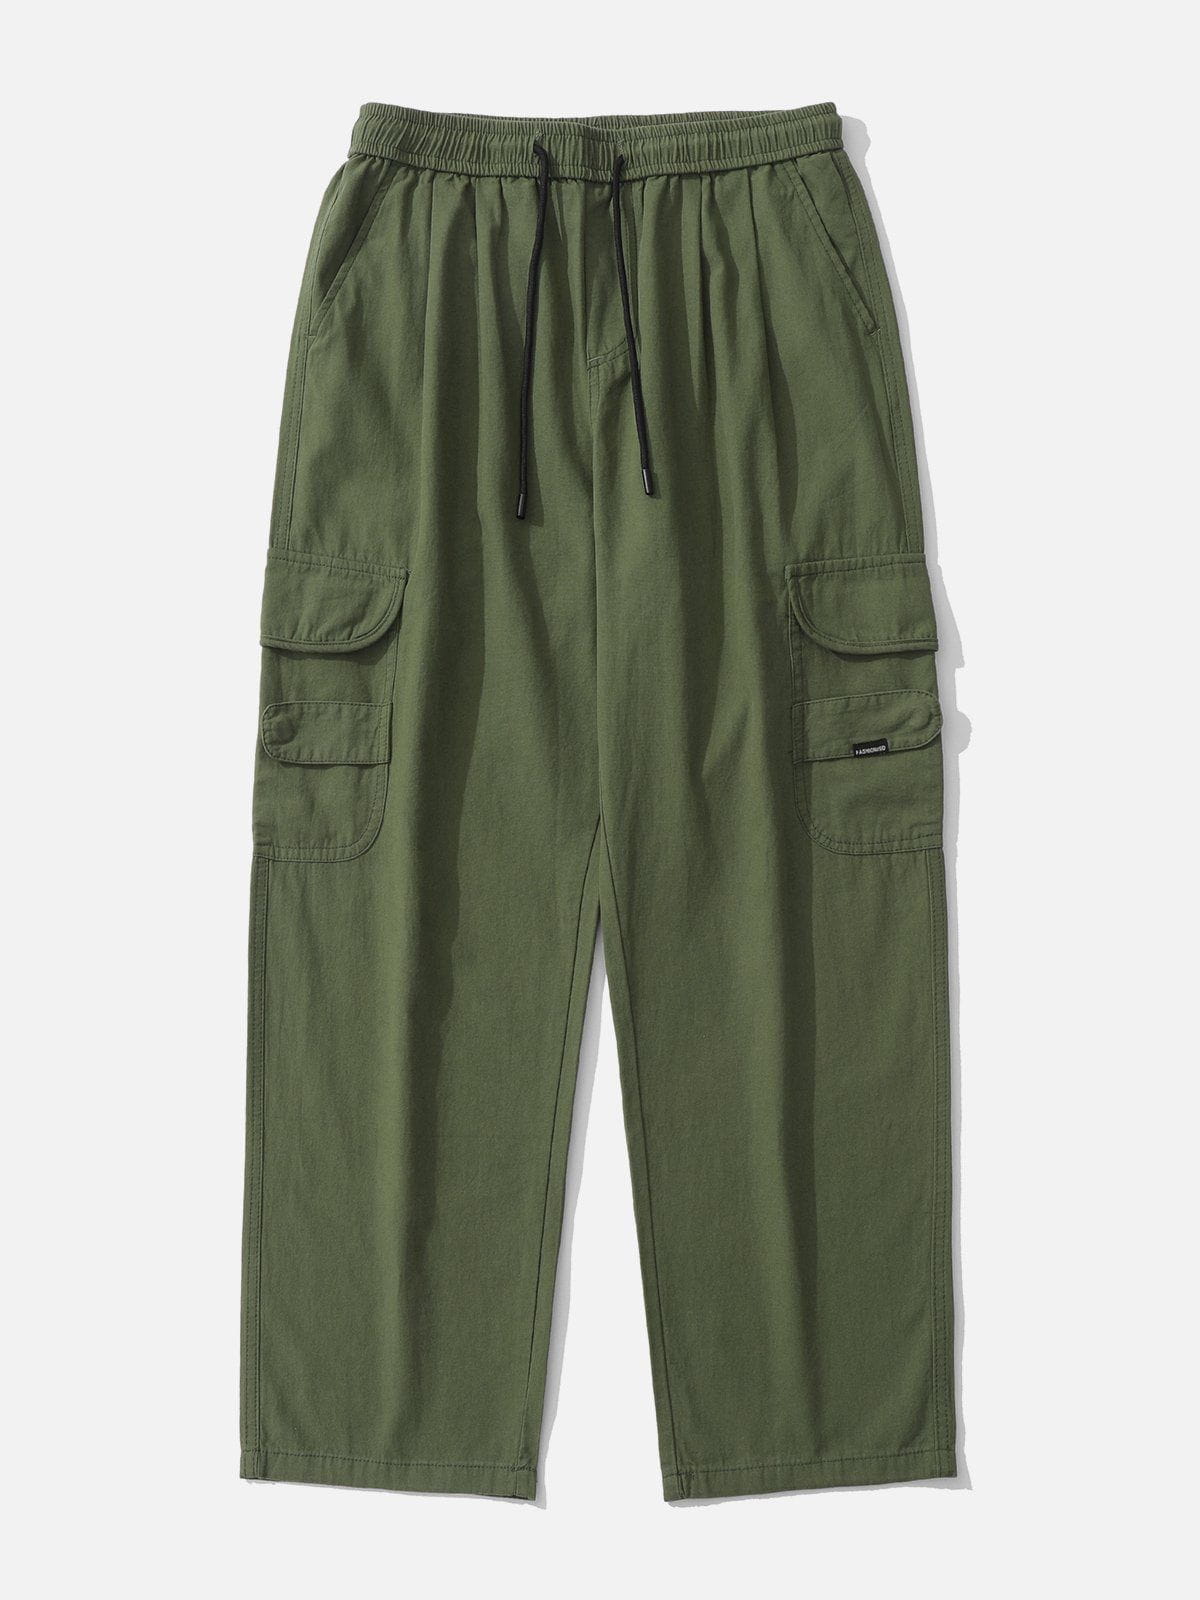 Majesda® - Solid Large Multi-Pocket Cargo Pants outfit ideas streetwear fashion